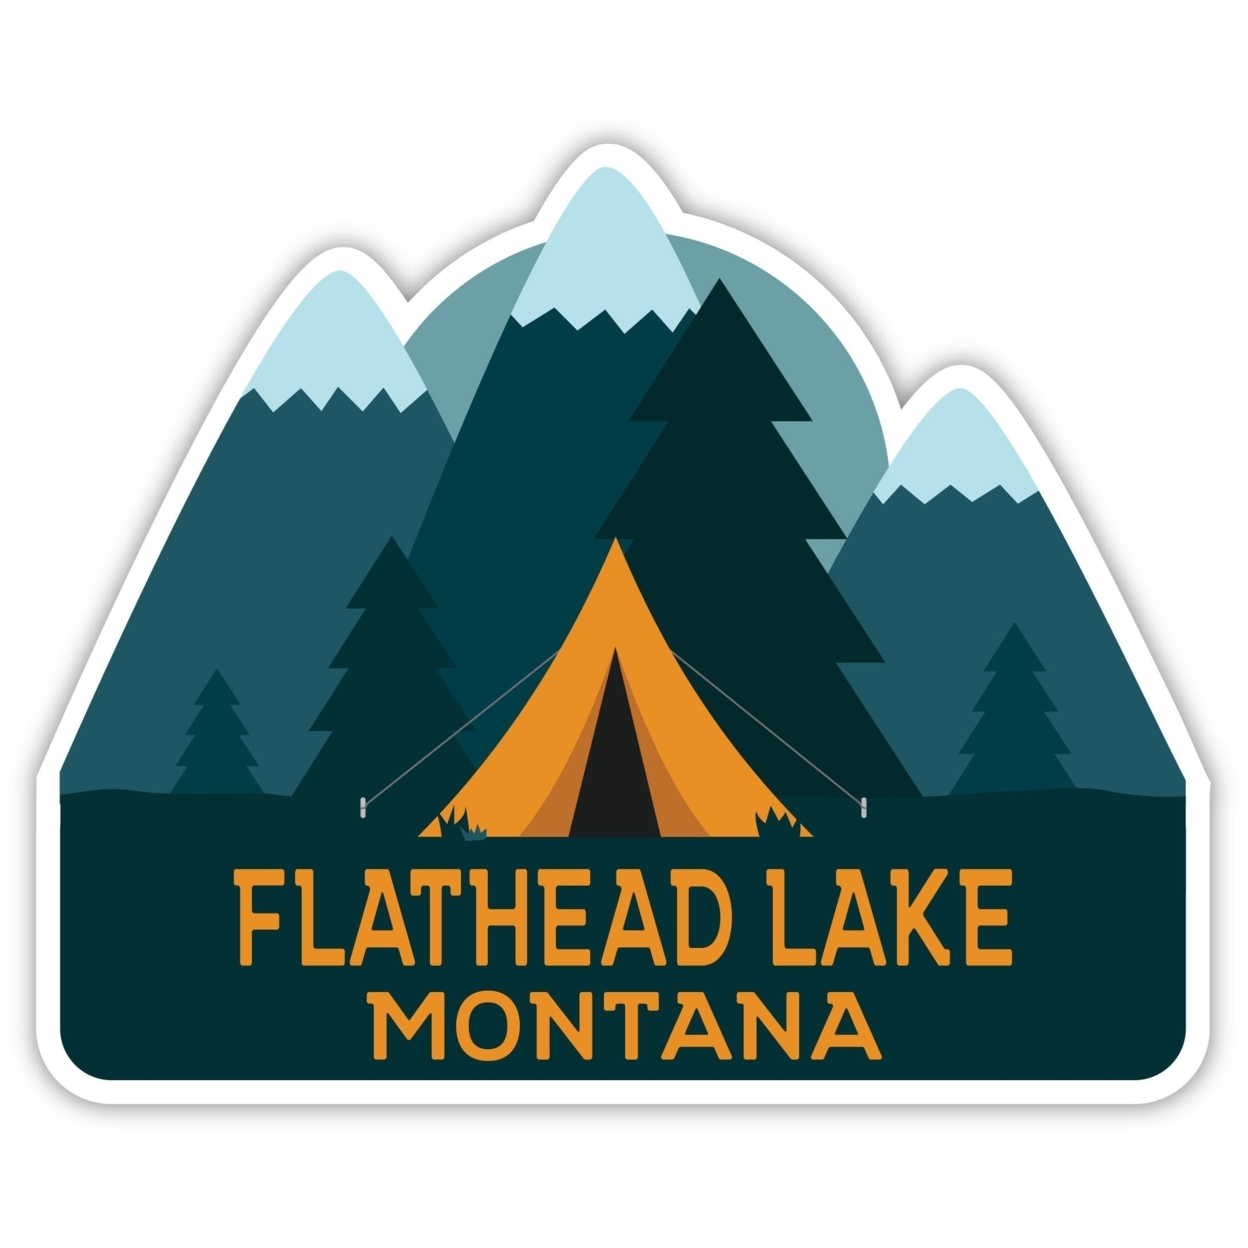 Flathead Lake Montana Souvenir Decorative Stickers (Choose Theme And Size) - 4-Pack, 4-Inch, Tent